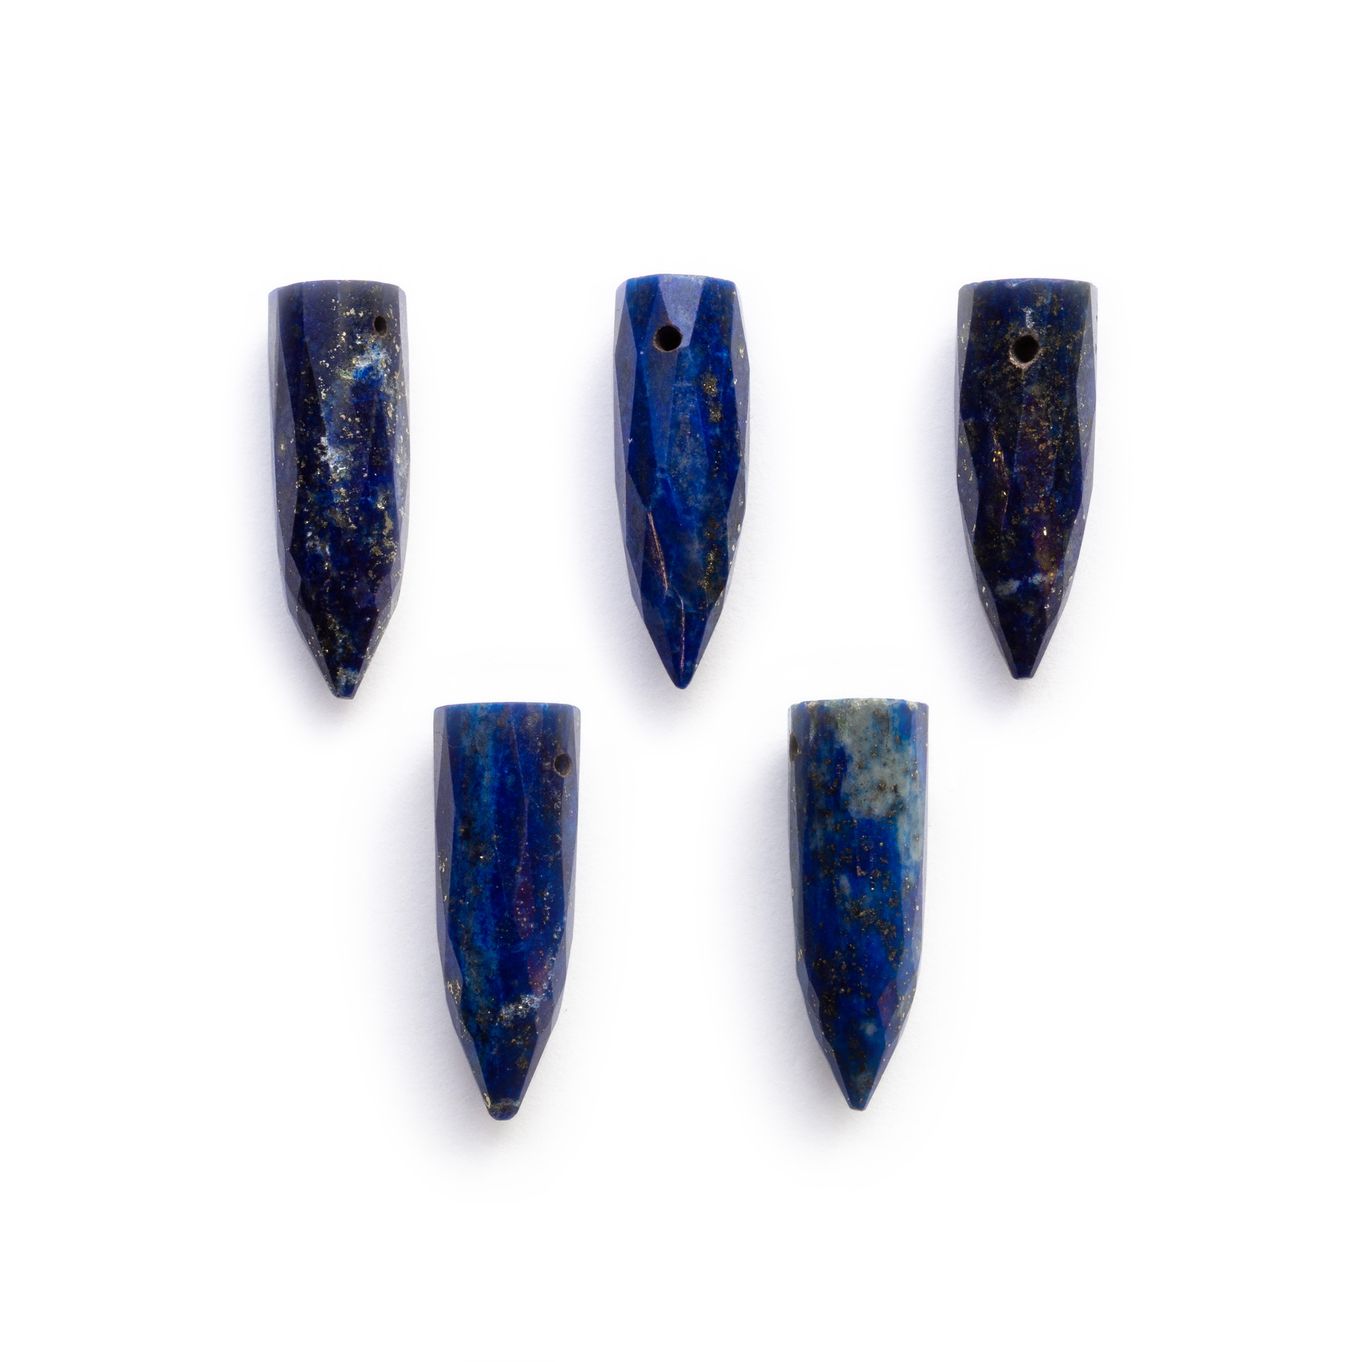 5 Pc Lapis Lazuli 8mm Real Gemstone Decorative Sewing Pin, Cross